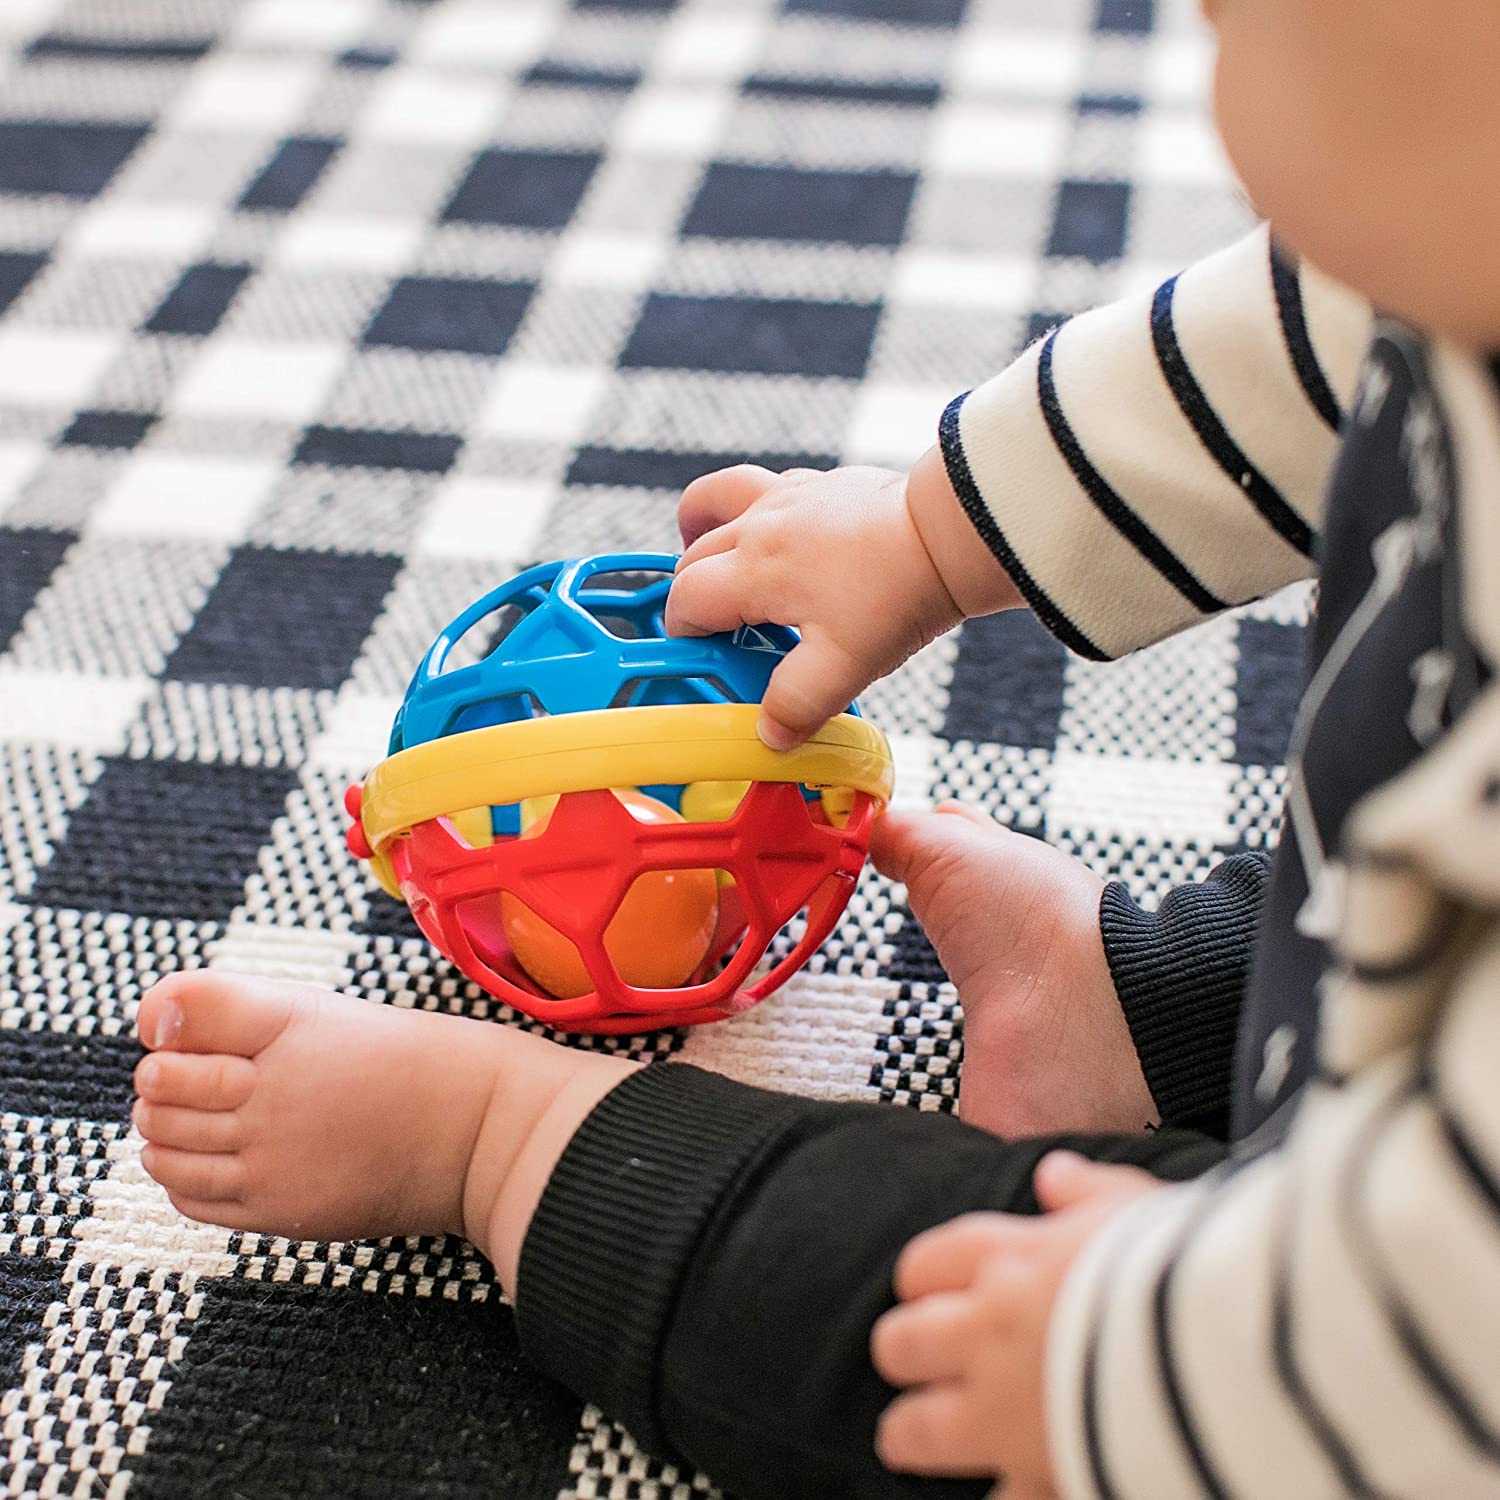 Baby Einstein Bendy Ball Rattle Toy, Ages 3 months +